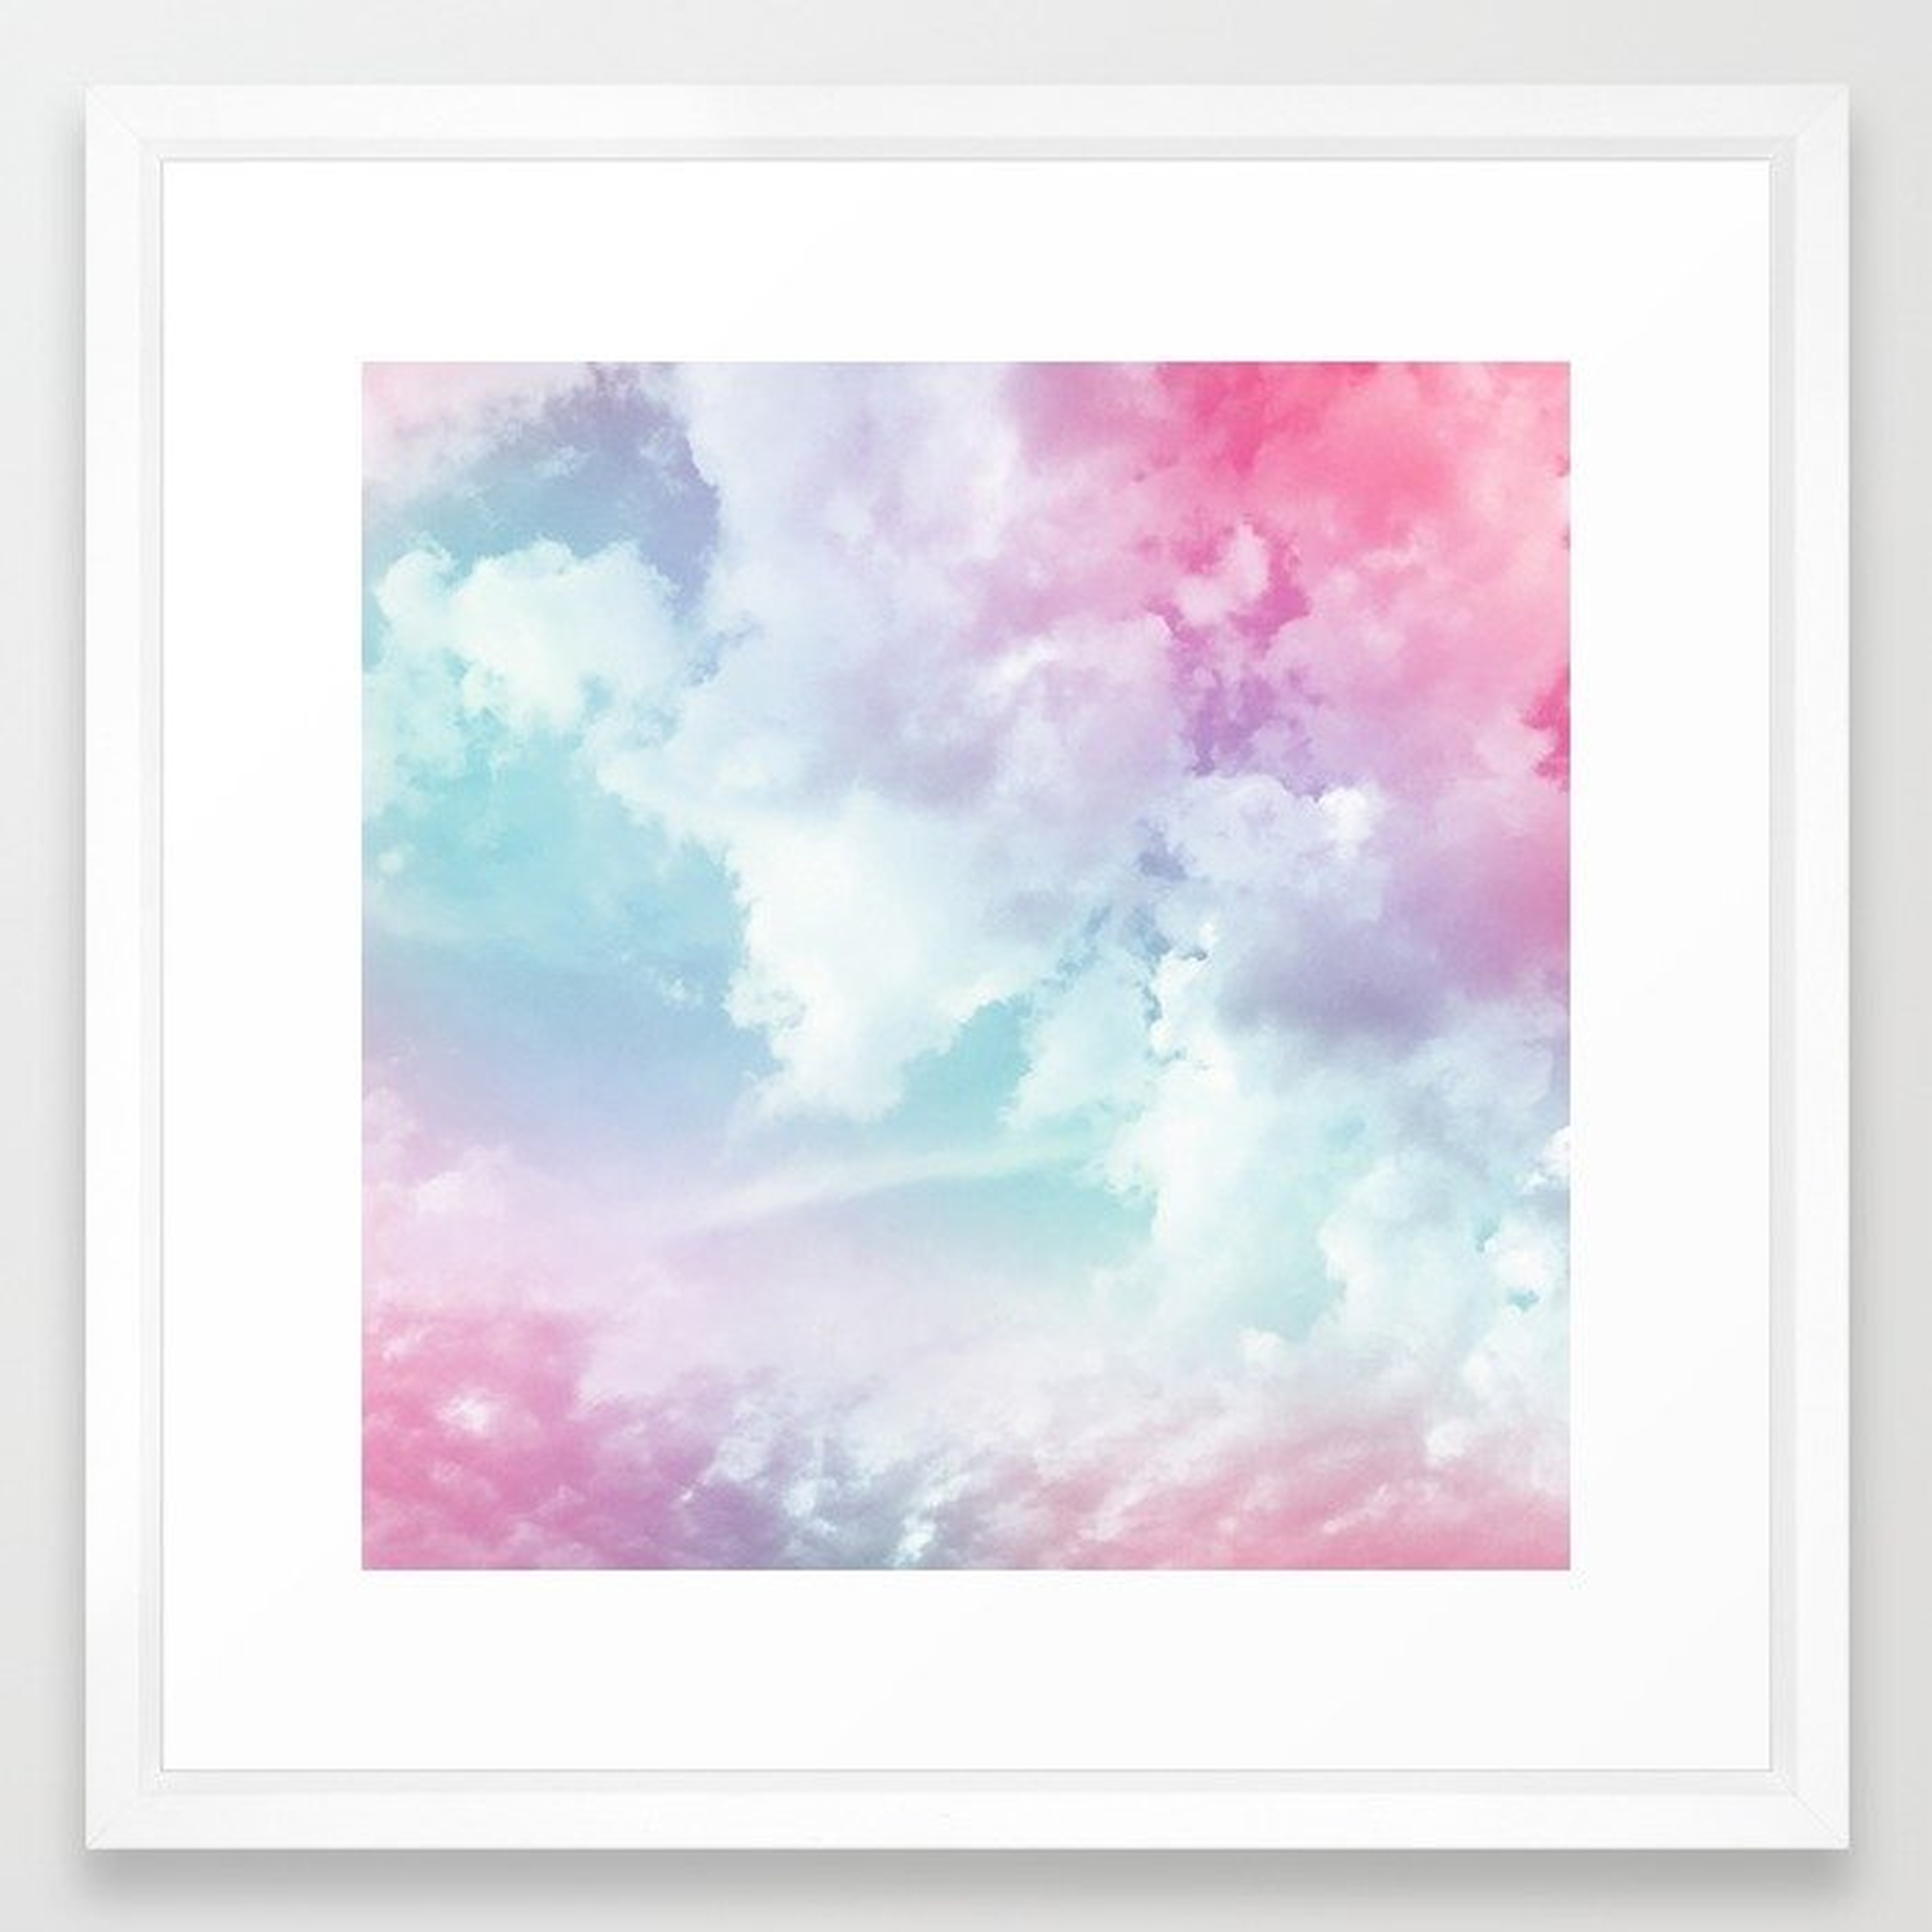 Cotton Candy Sky Framed Art Print - 22"x22" White vector frame - Society6